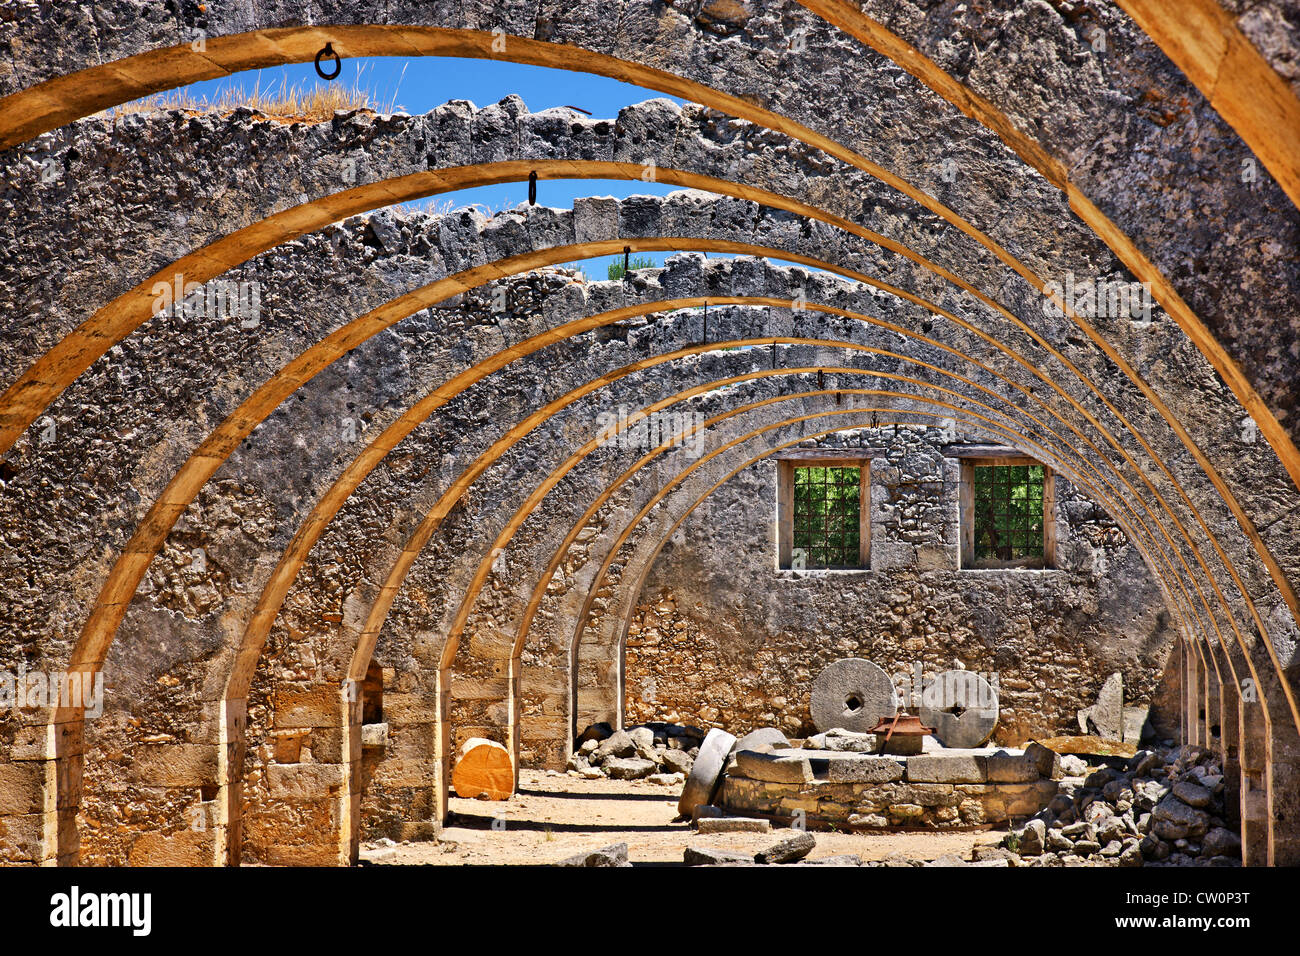 Beautiful arches in the old olive press at Agios Georgios (Saint George) monastery, Karydi, Apokoronas, Chania, Crete, Greece. Stock Photo